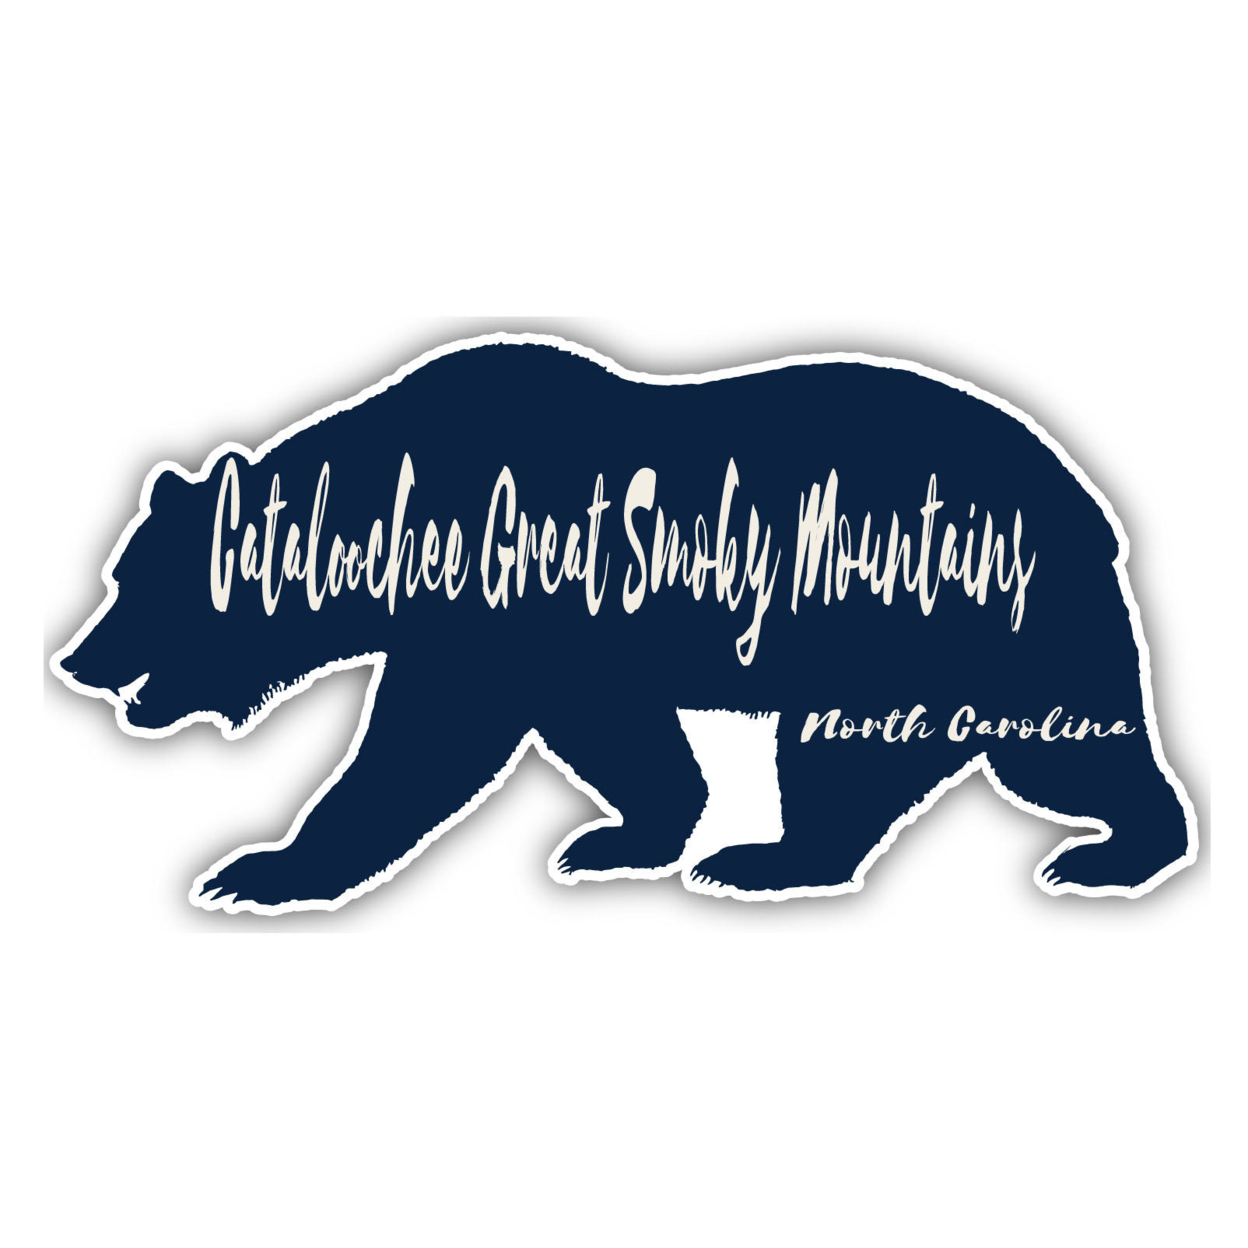 Cataloochee Great Smoky Mountains North Carolina Souvenir Decorative Stickers (Choose Theme And Size) - Single Unit, 10-Inch, Bear